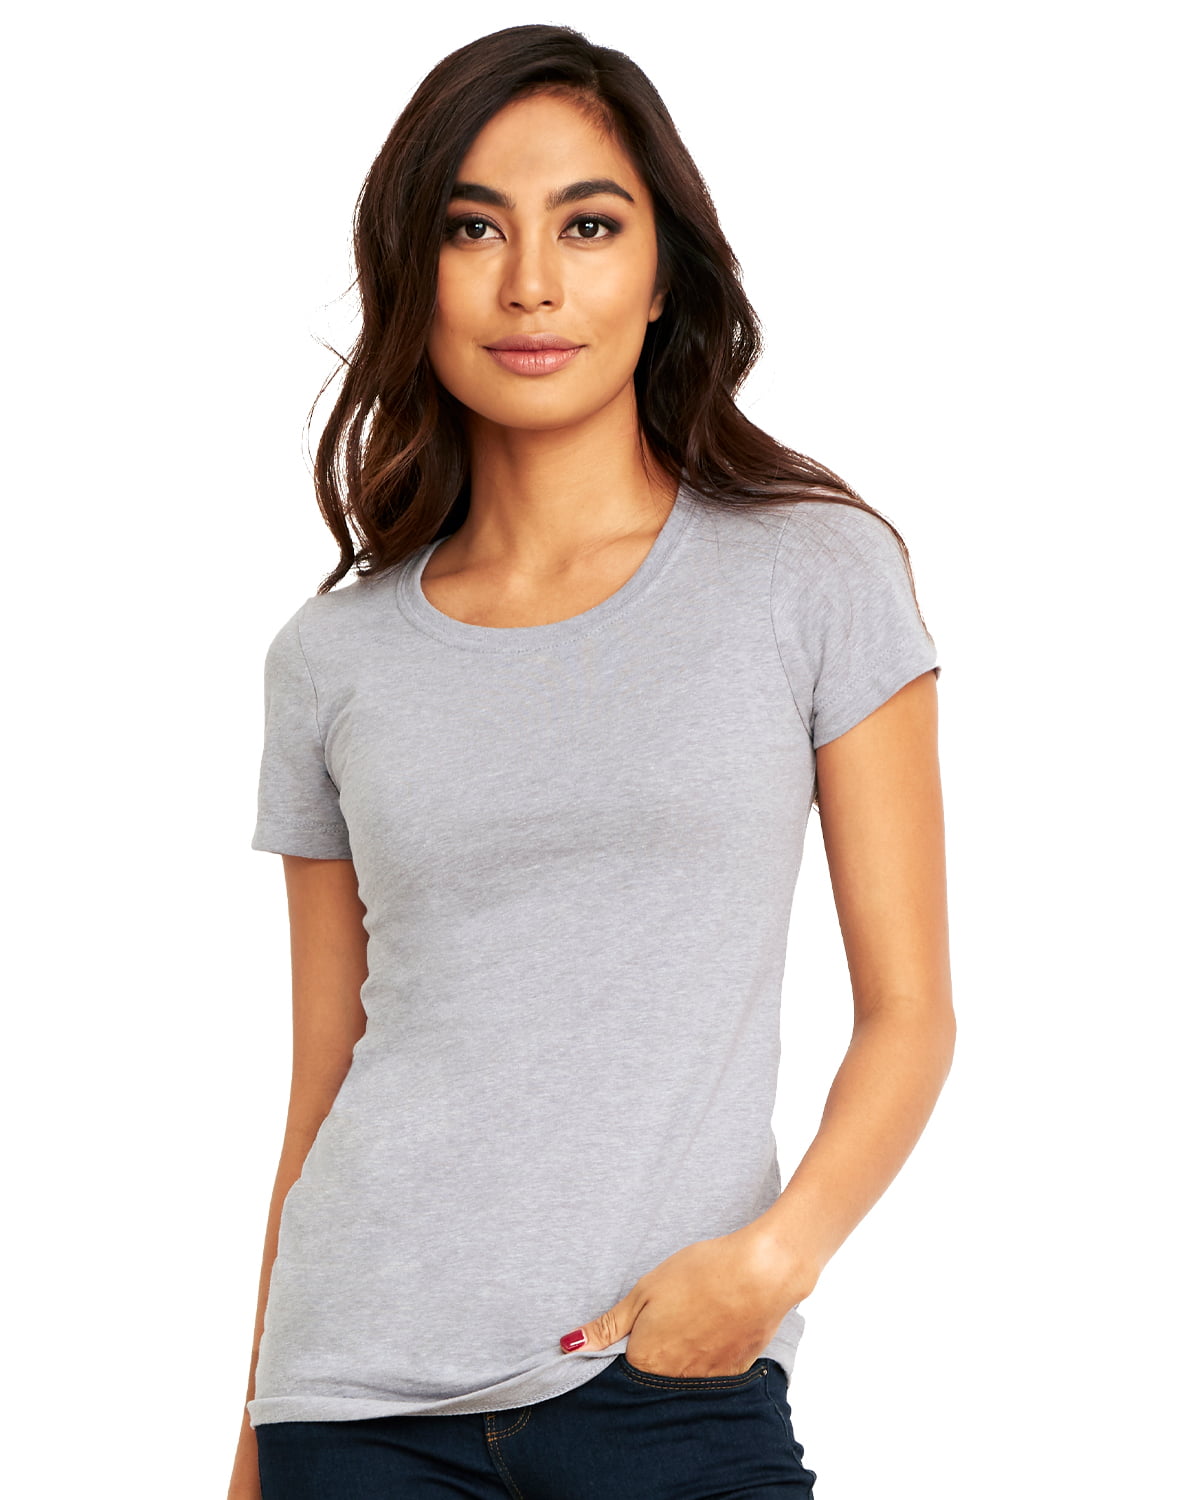 Next Level Apparel - Next Level Ladies' Ideal T-Shirt - N1510 - Walmart ...